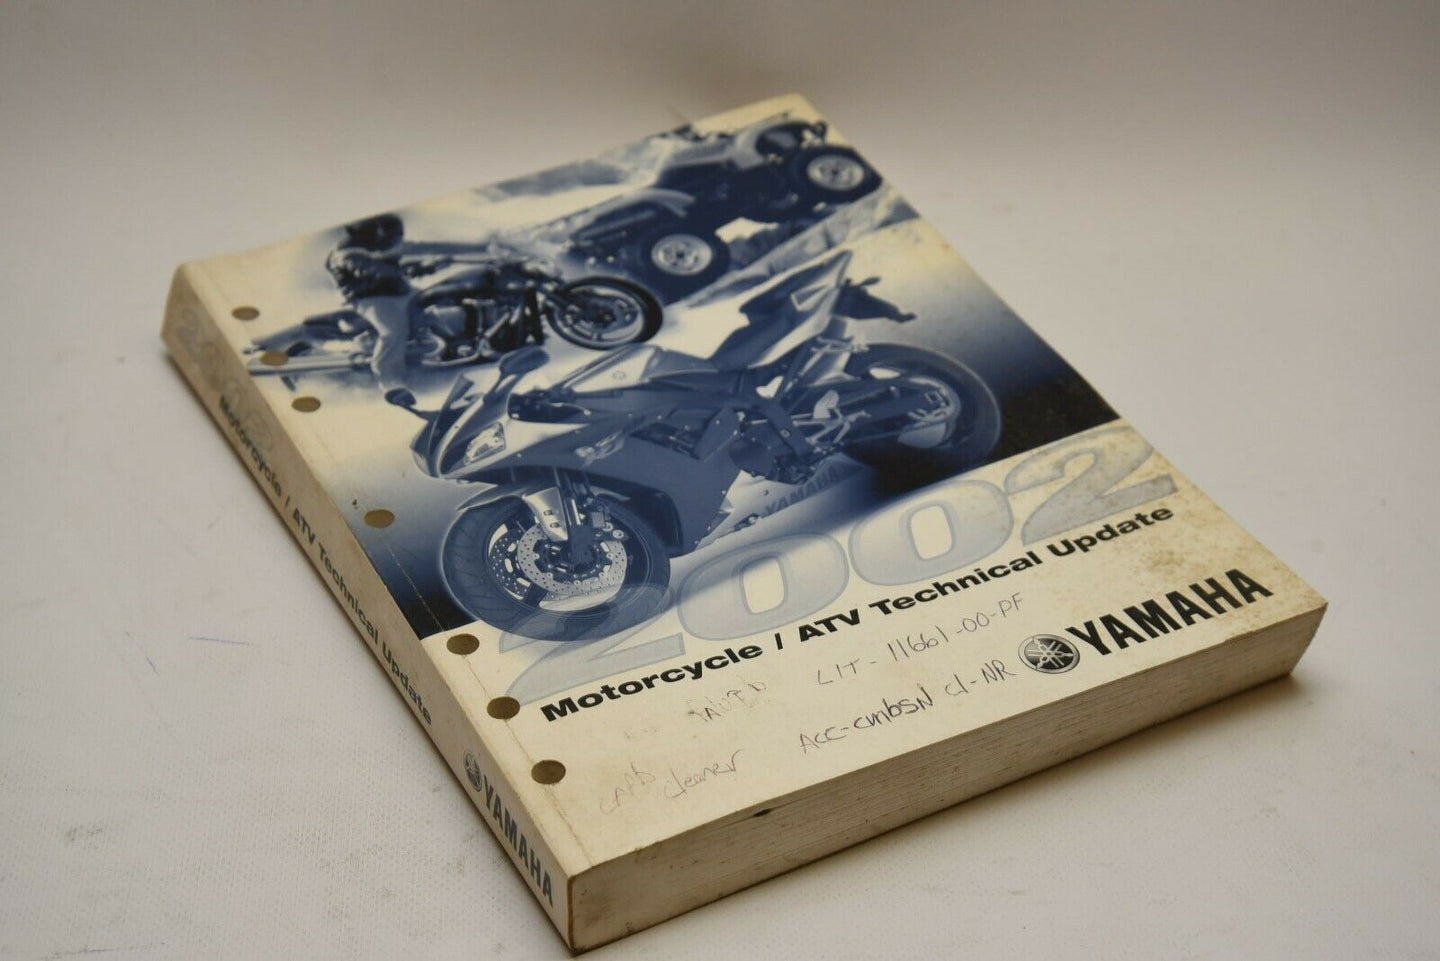 OEM Yamaha Technical Update Manual (YTA) LIT-17500-00-02 Motorcycle ATV 2002 02